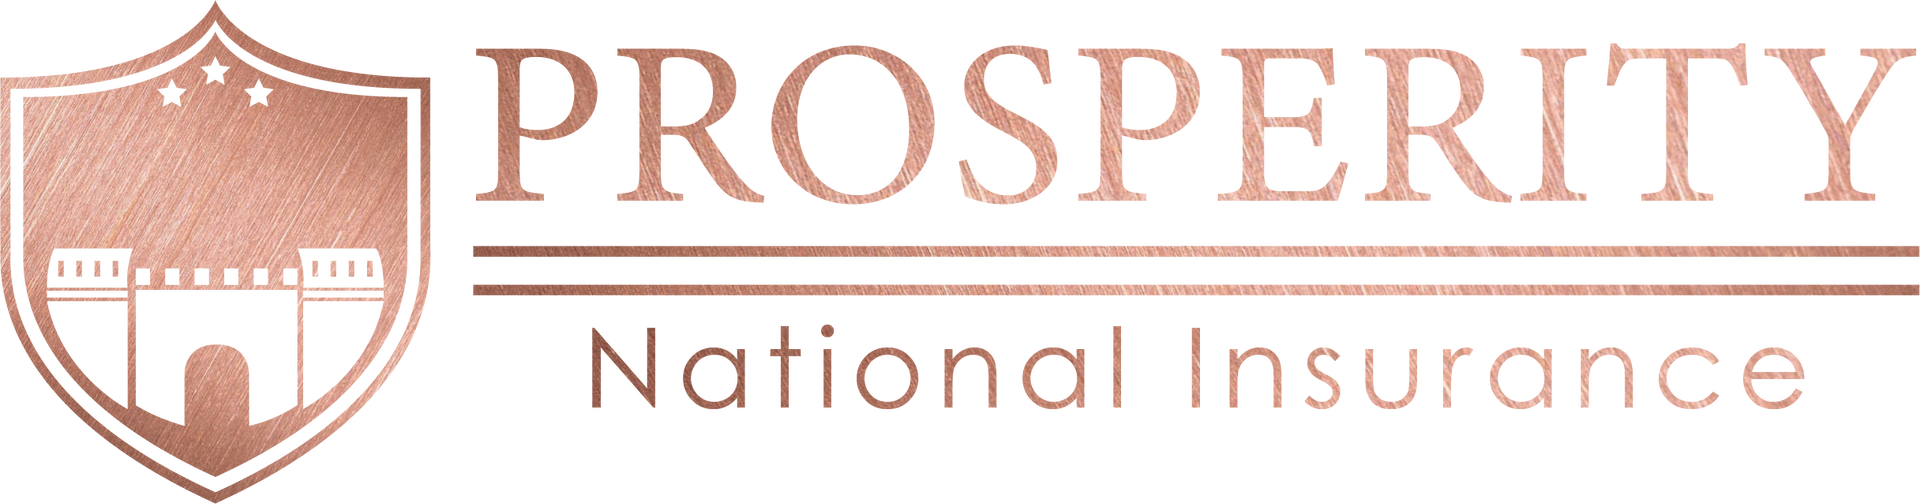 Prosperity National Insurance logo